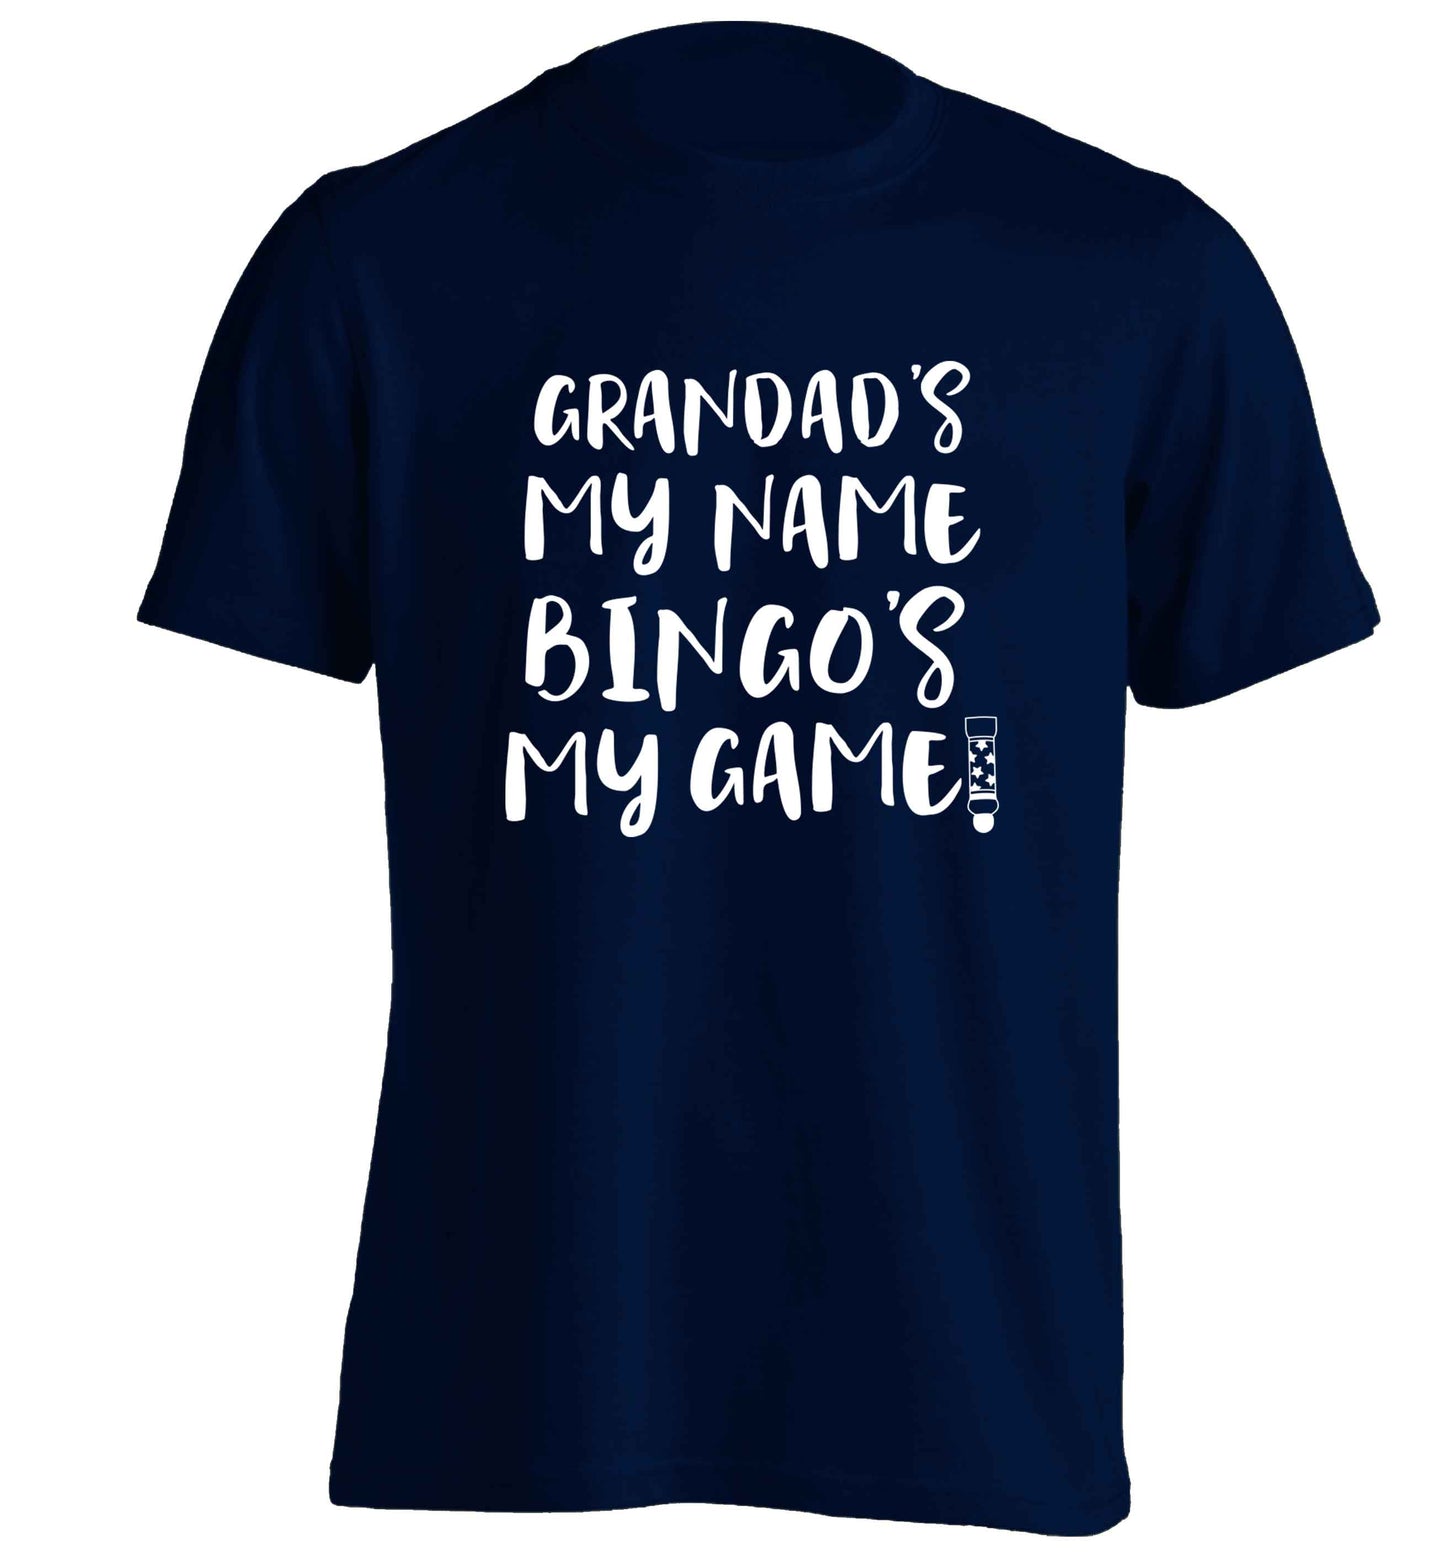 Grandad's my name bingo's my game! adults unisex navy Tshirt 2XL